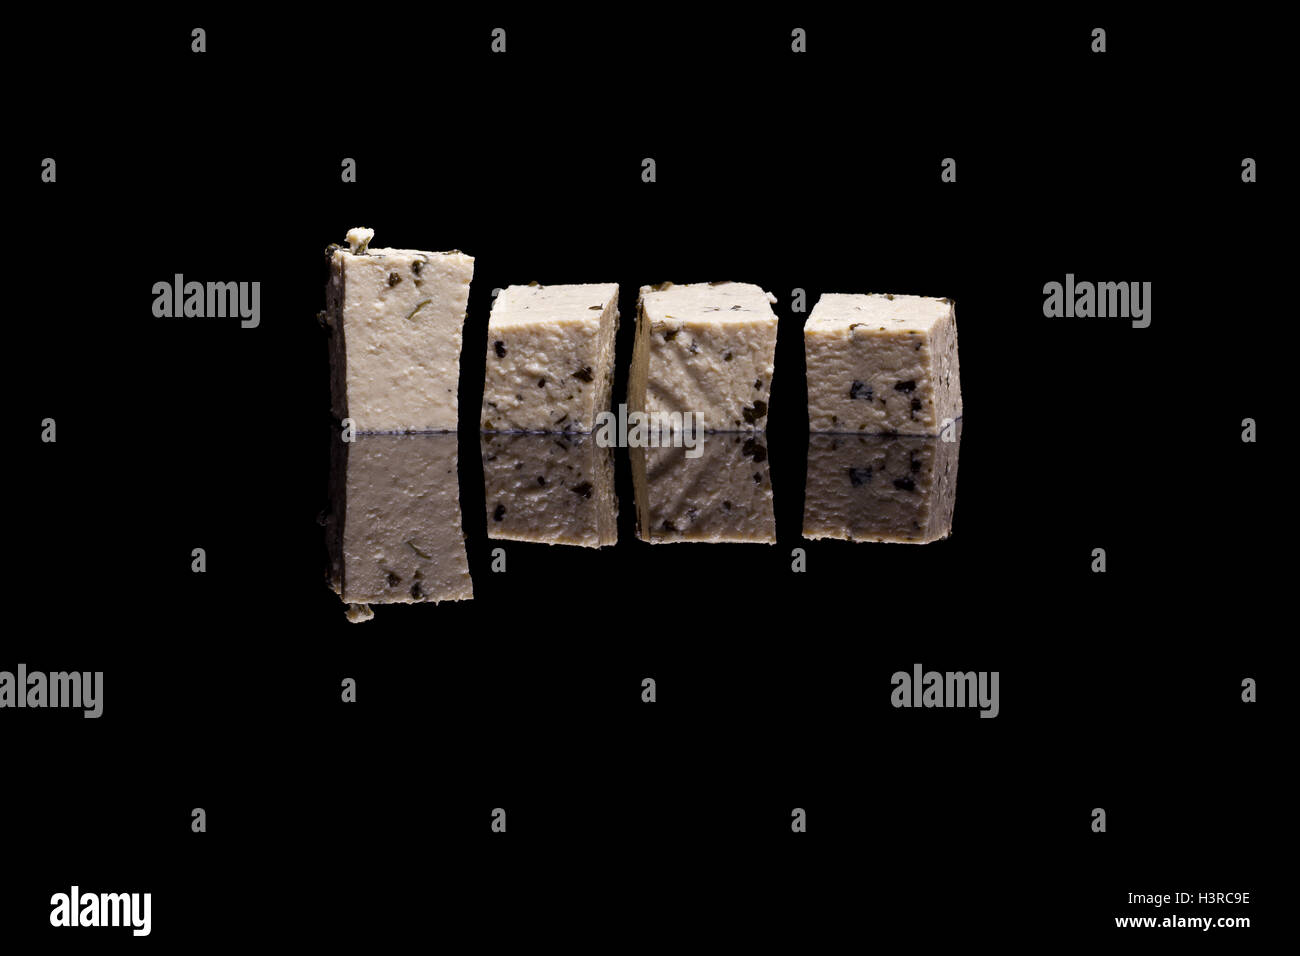 Four cubes of tofu with basil isolated on black reflective background Stock Photo